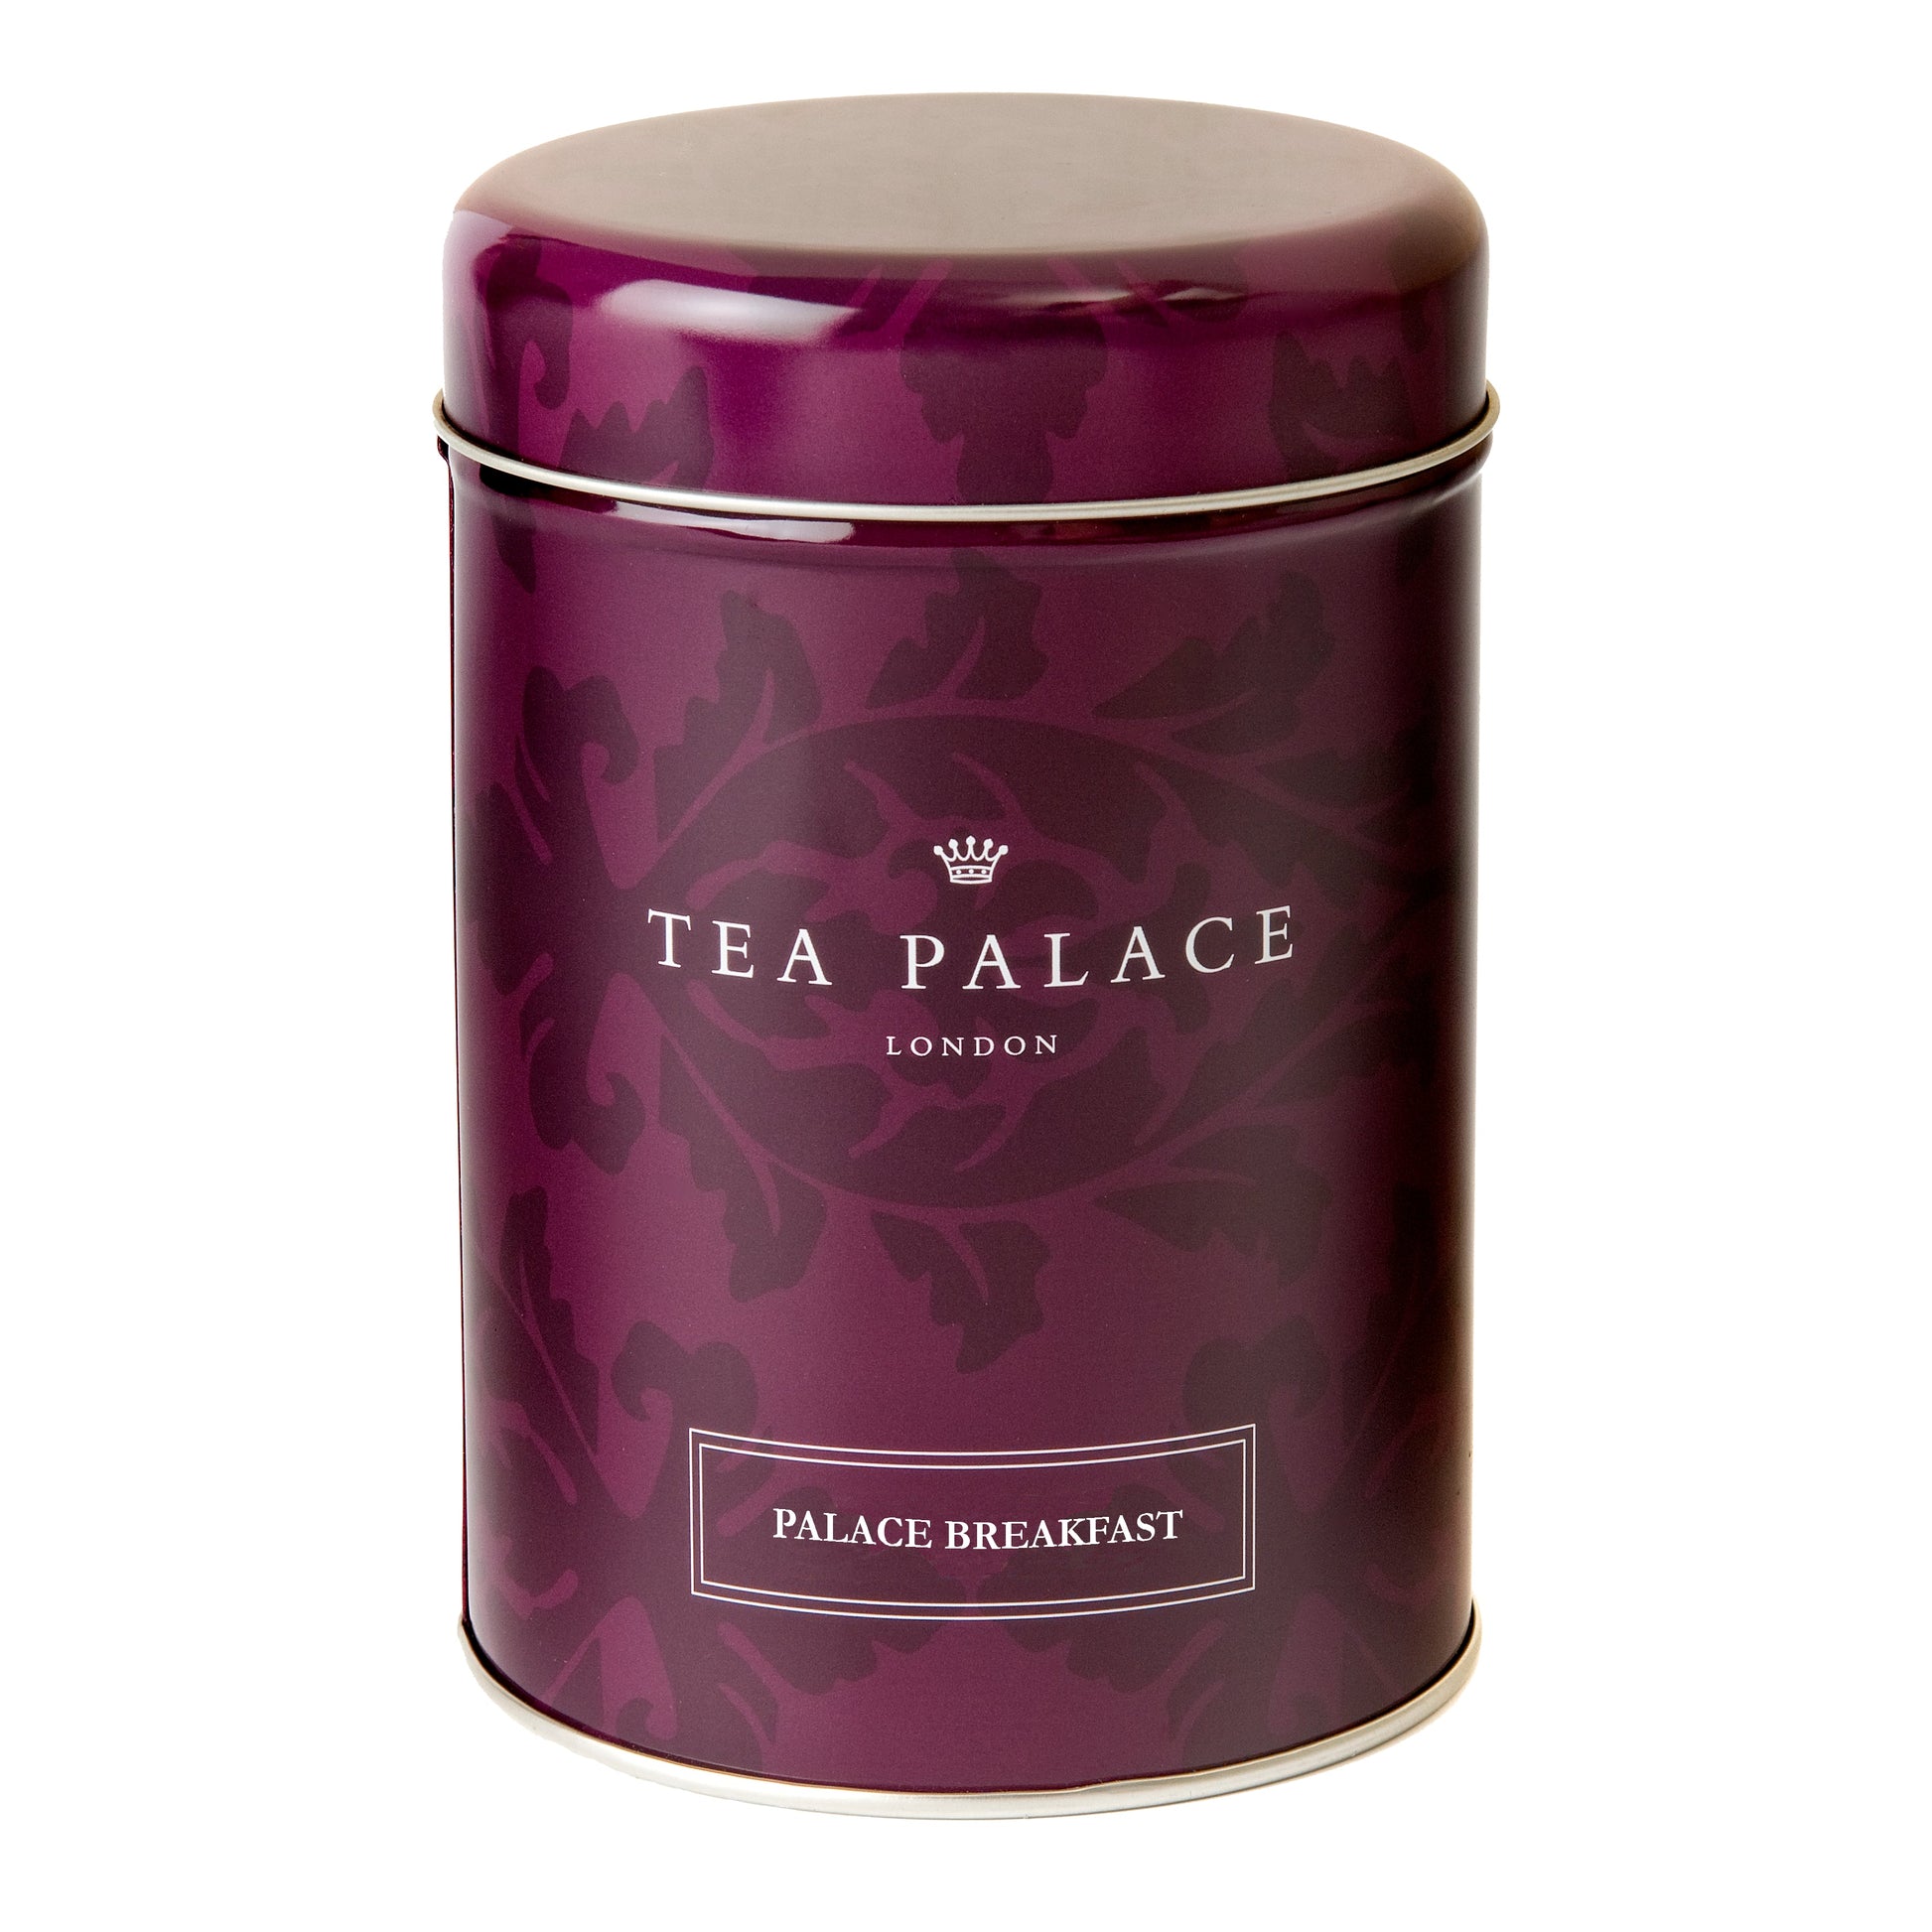 Tea Palace breakfast tea caddy